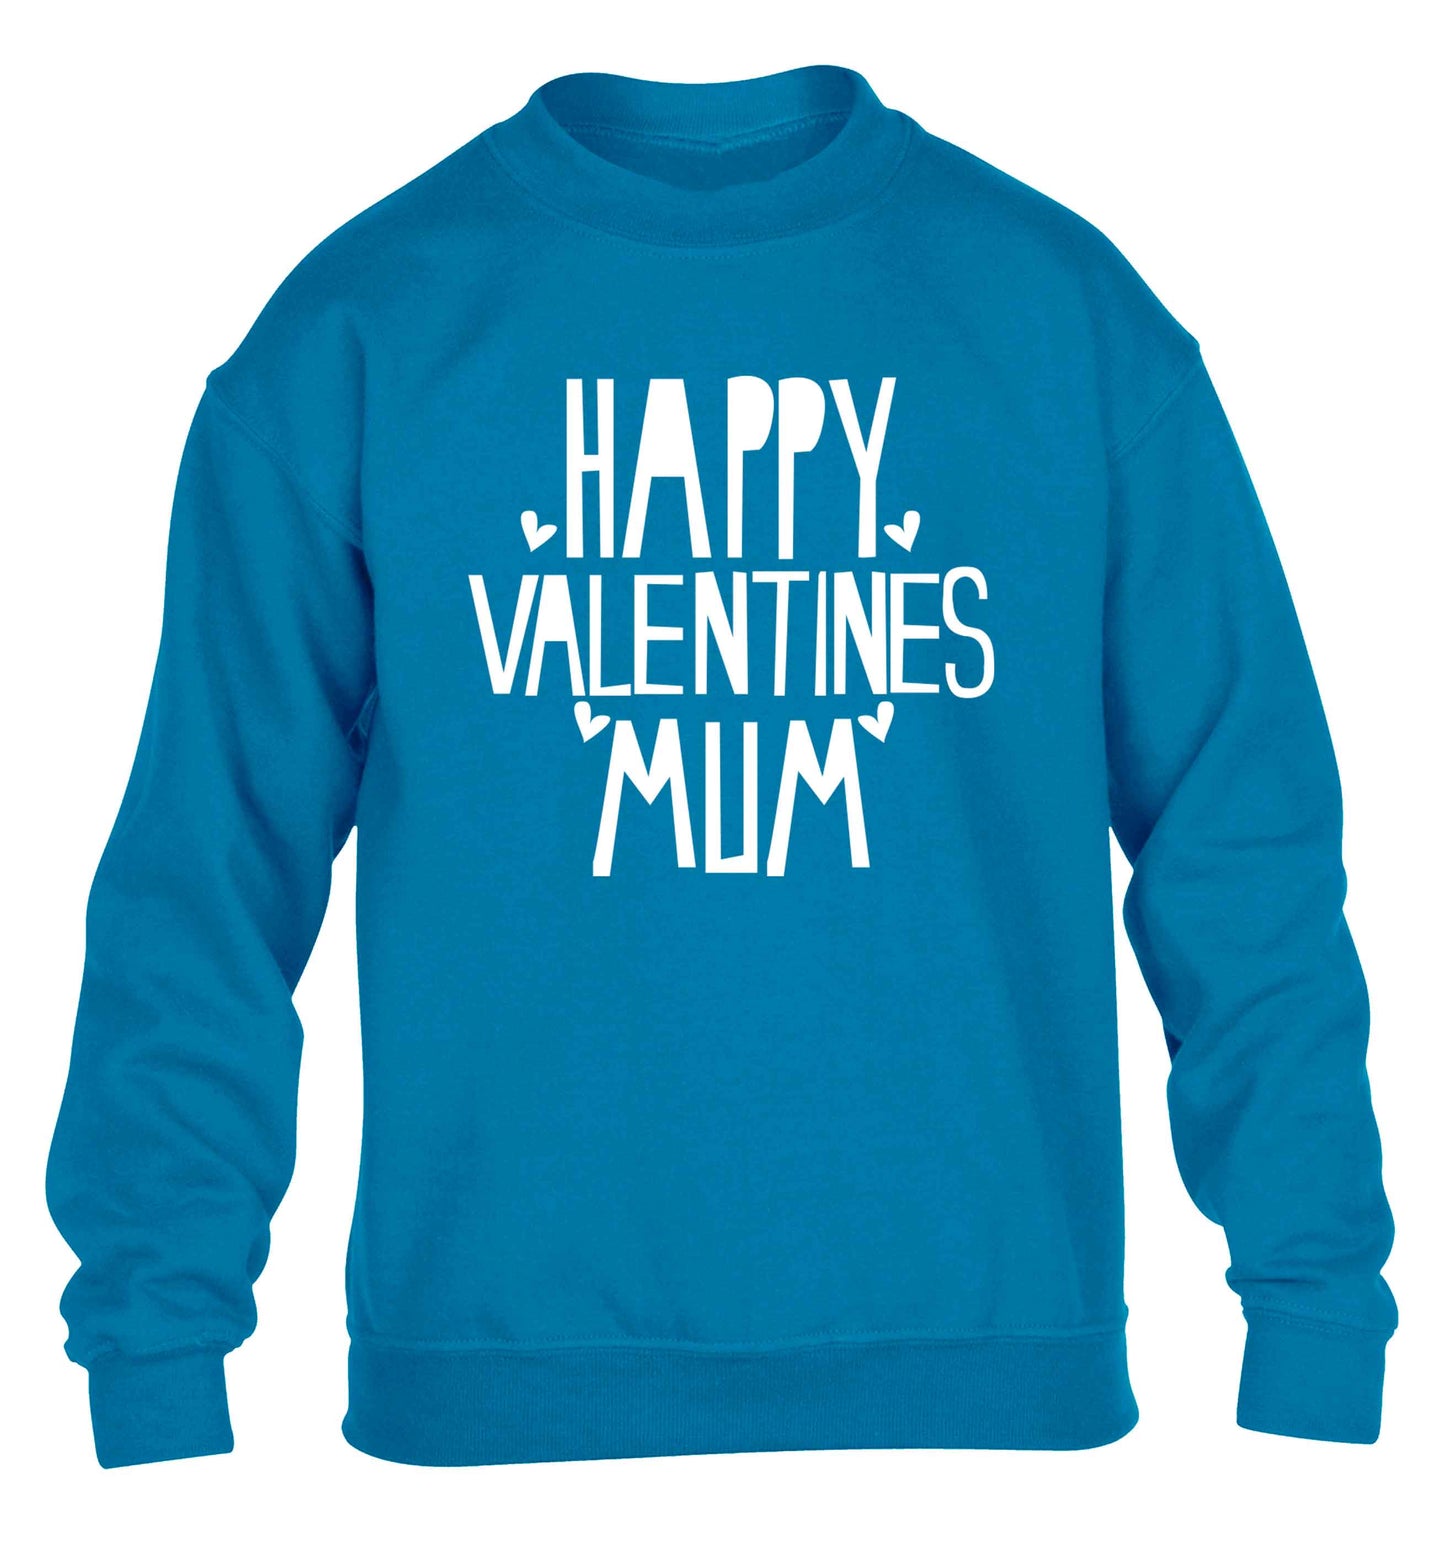 Happy valentines mum children's blue sweater 12-13 Years